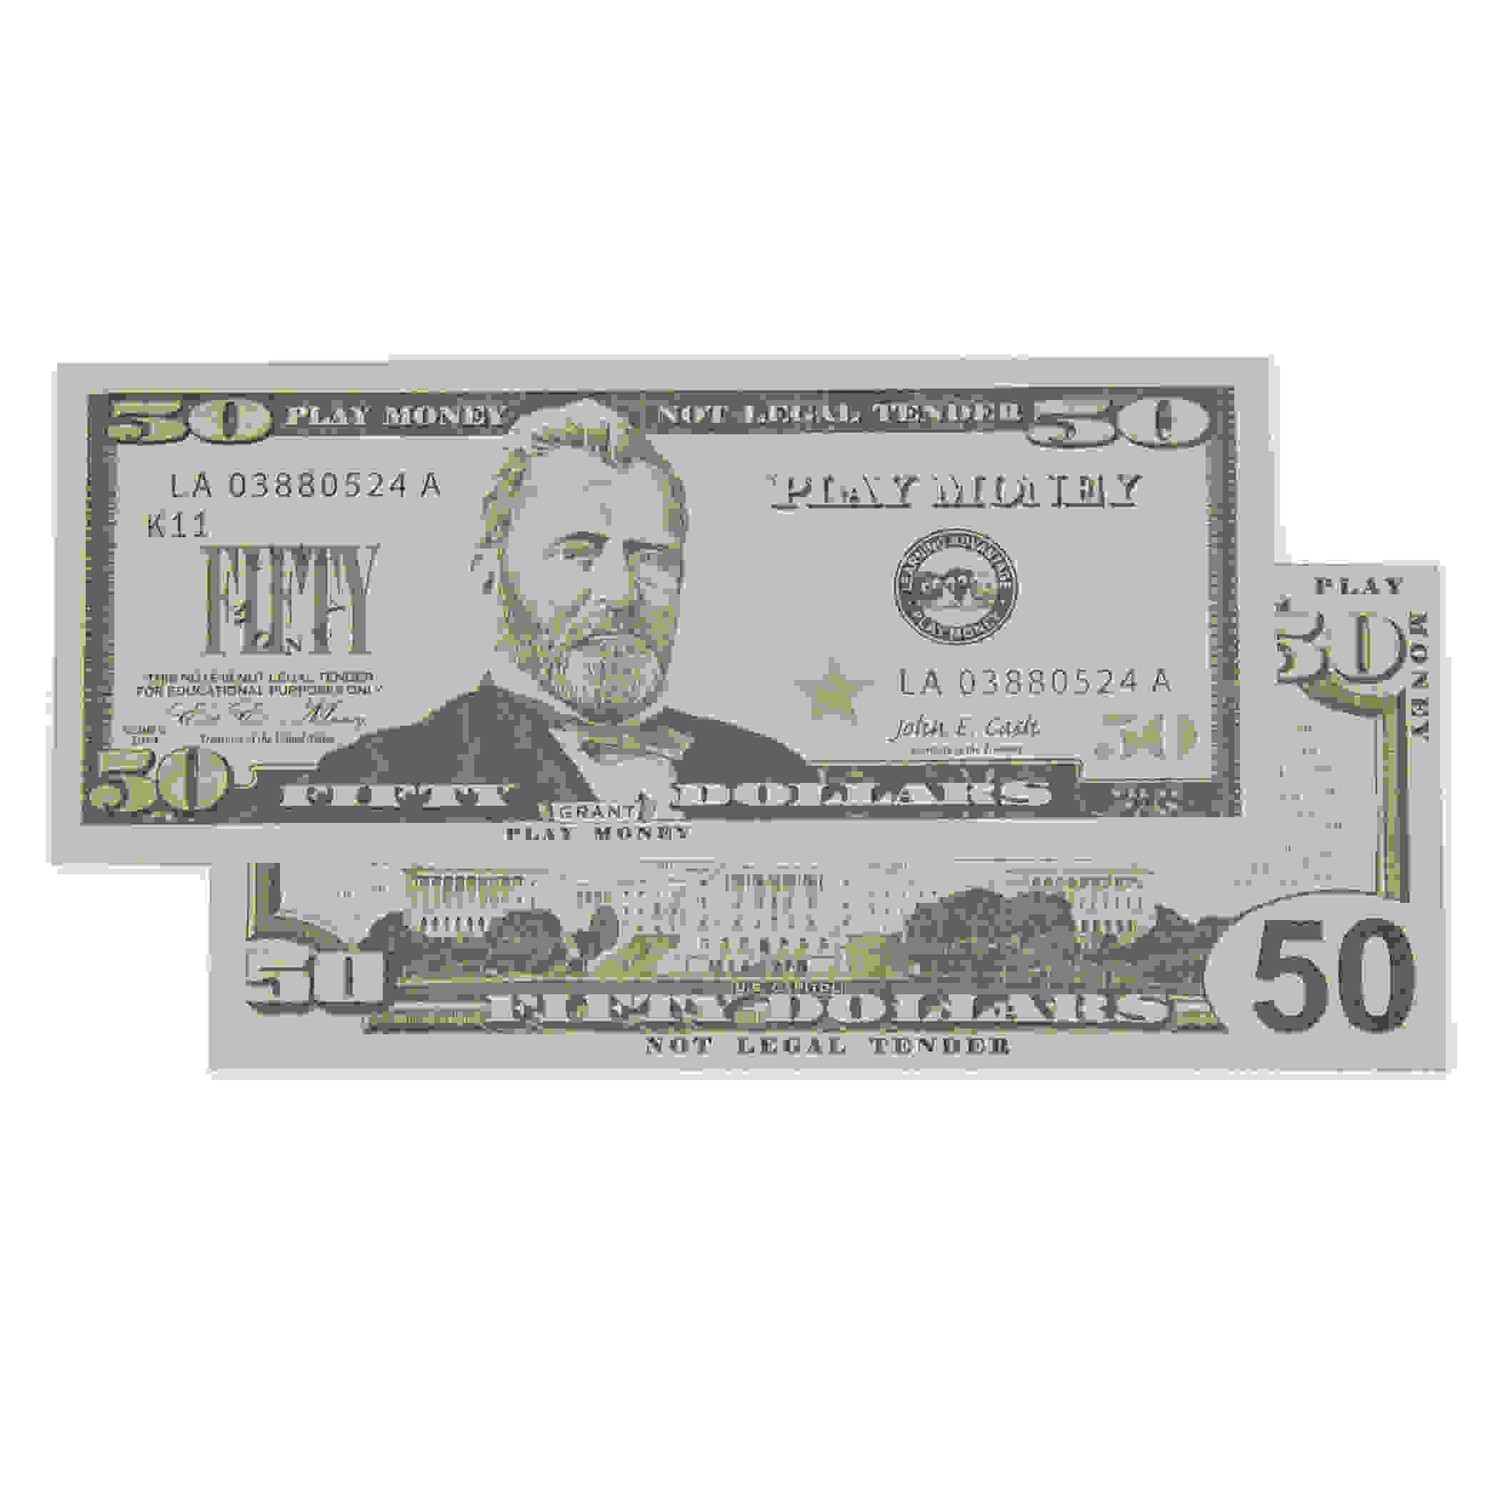 Play Bills - $50 Bills - Set of 50